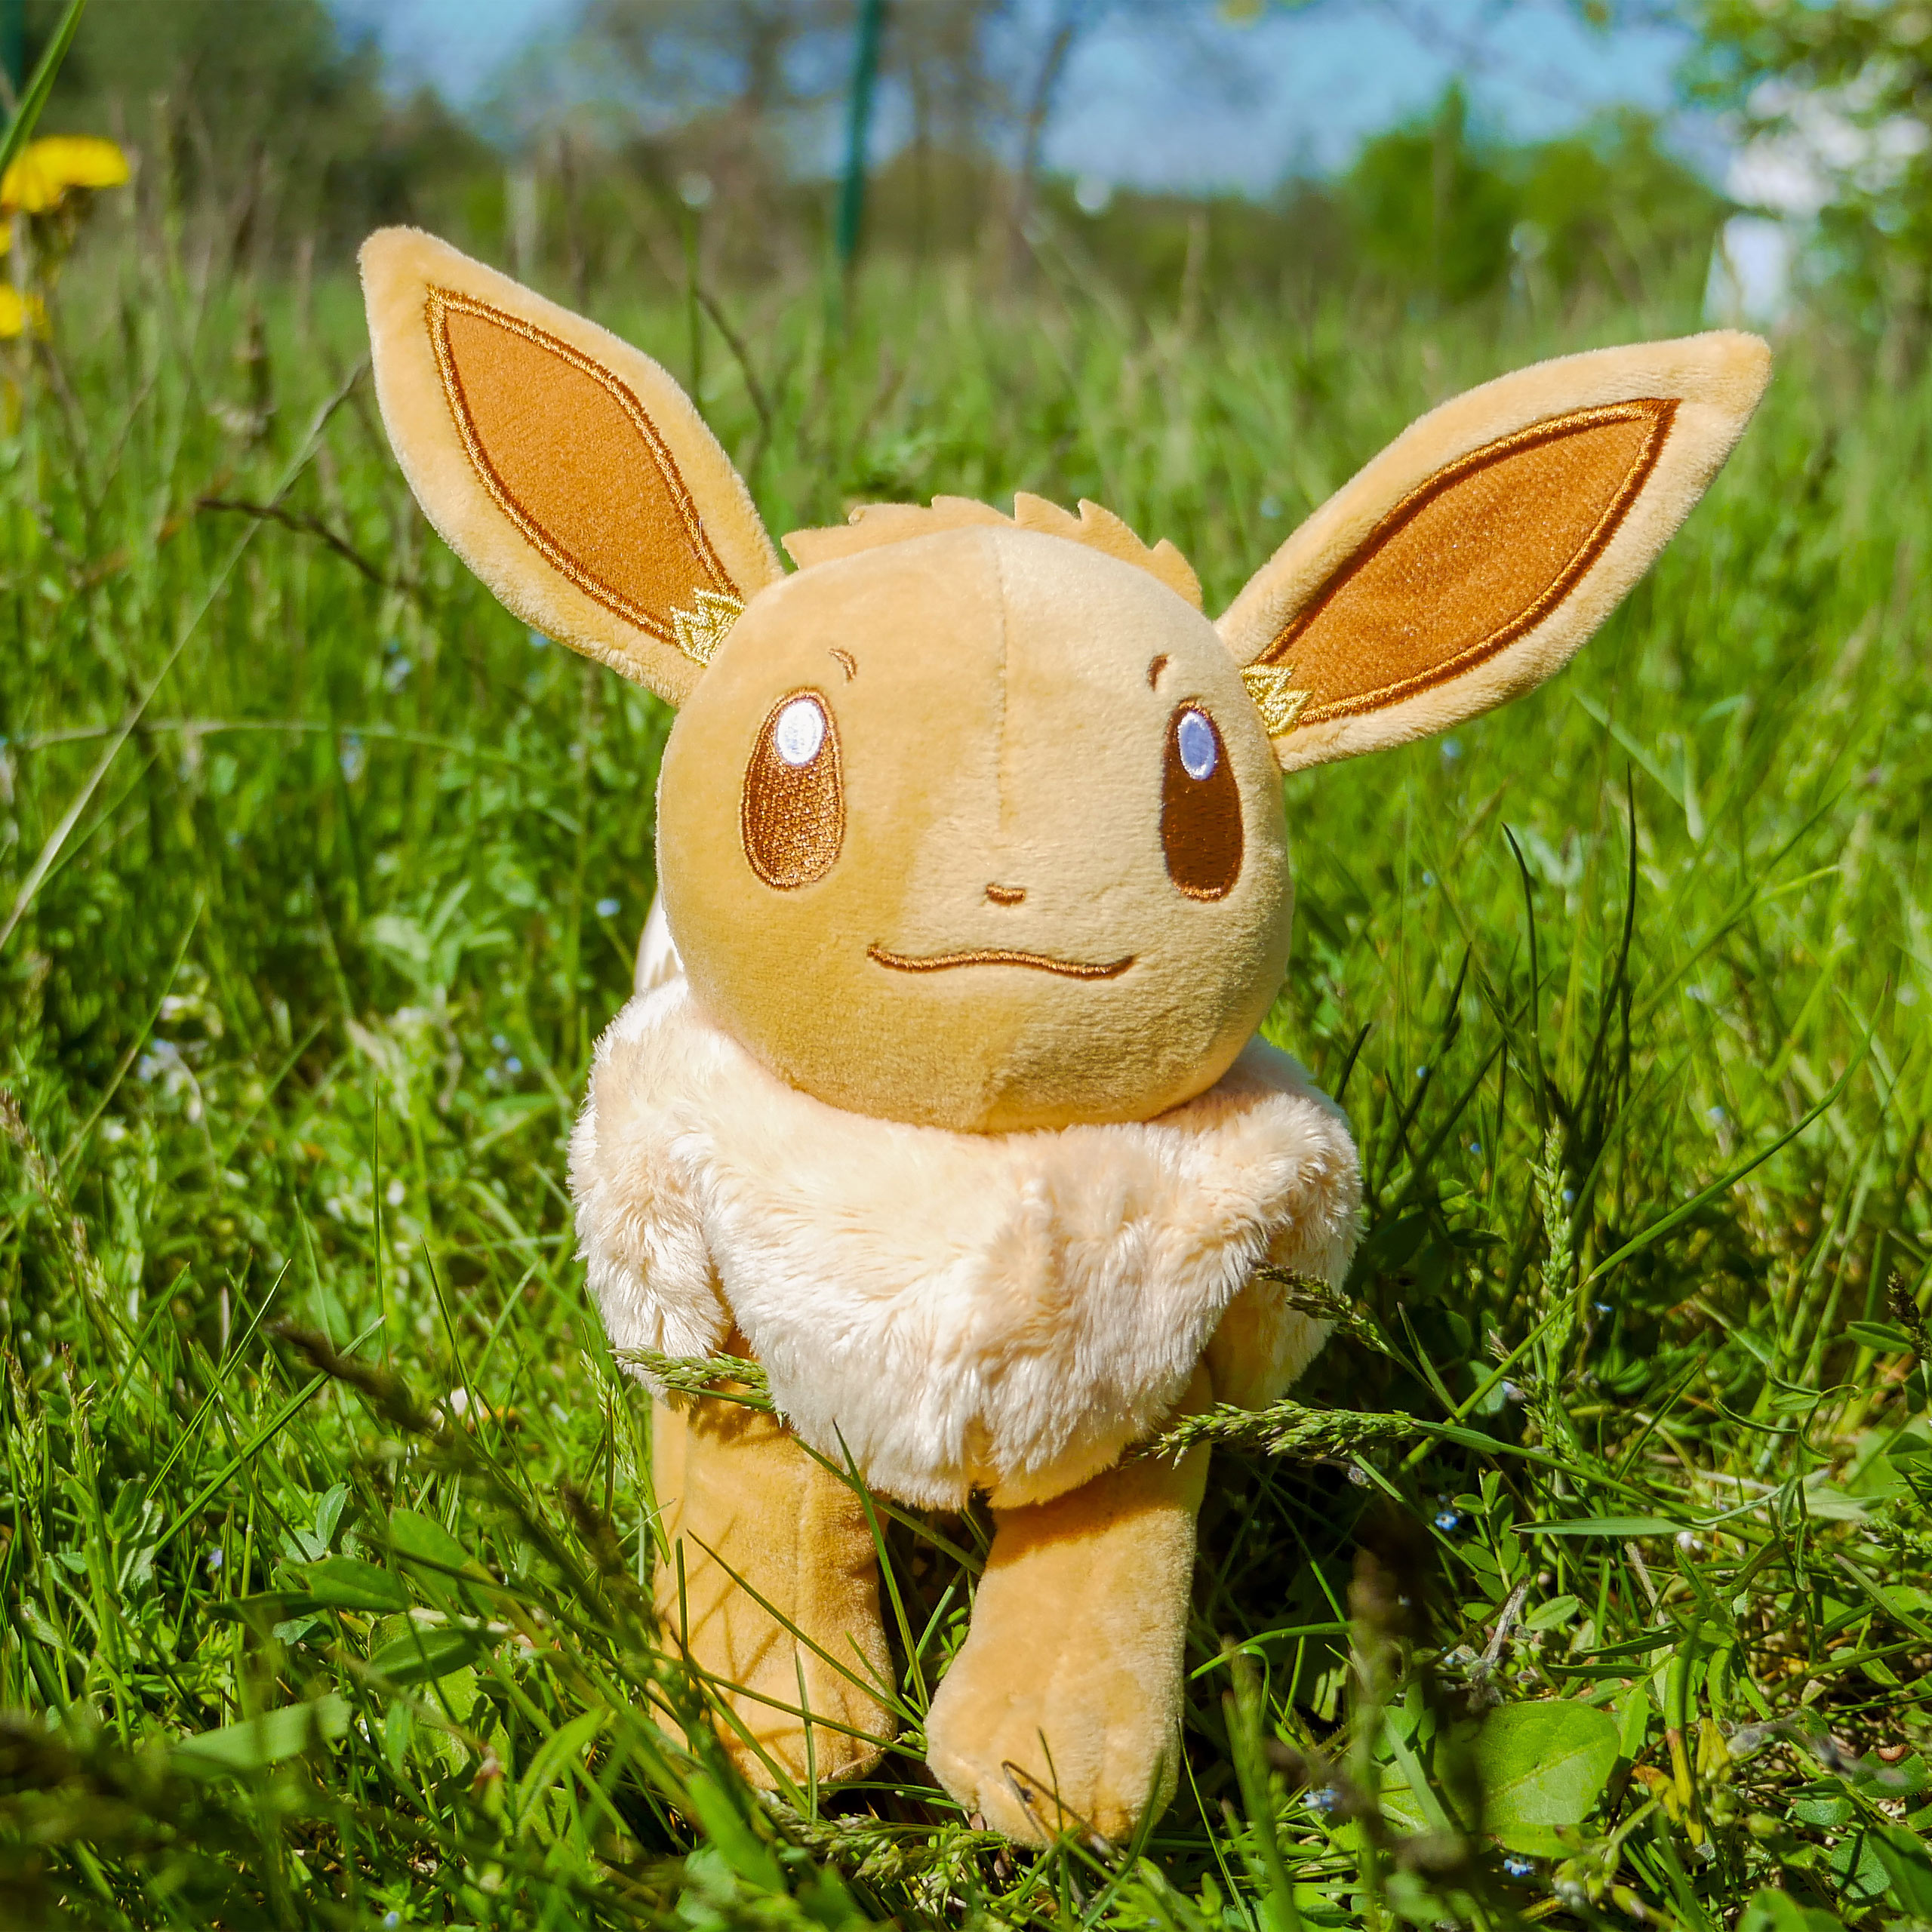 Pokemon - Figurine en peluche monochrome Eevee 22 cm